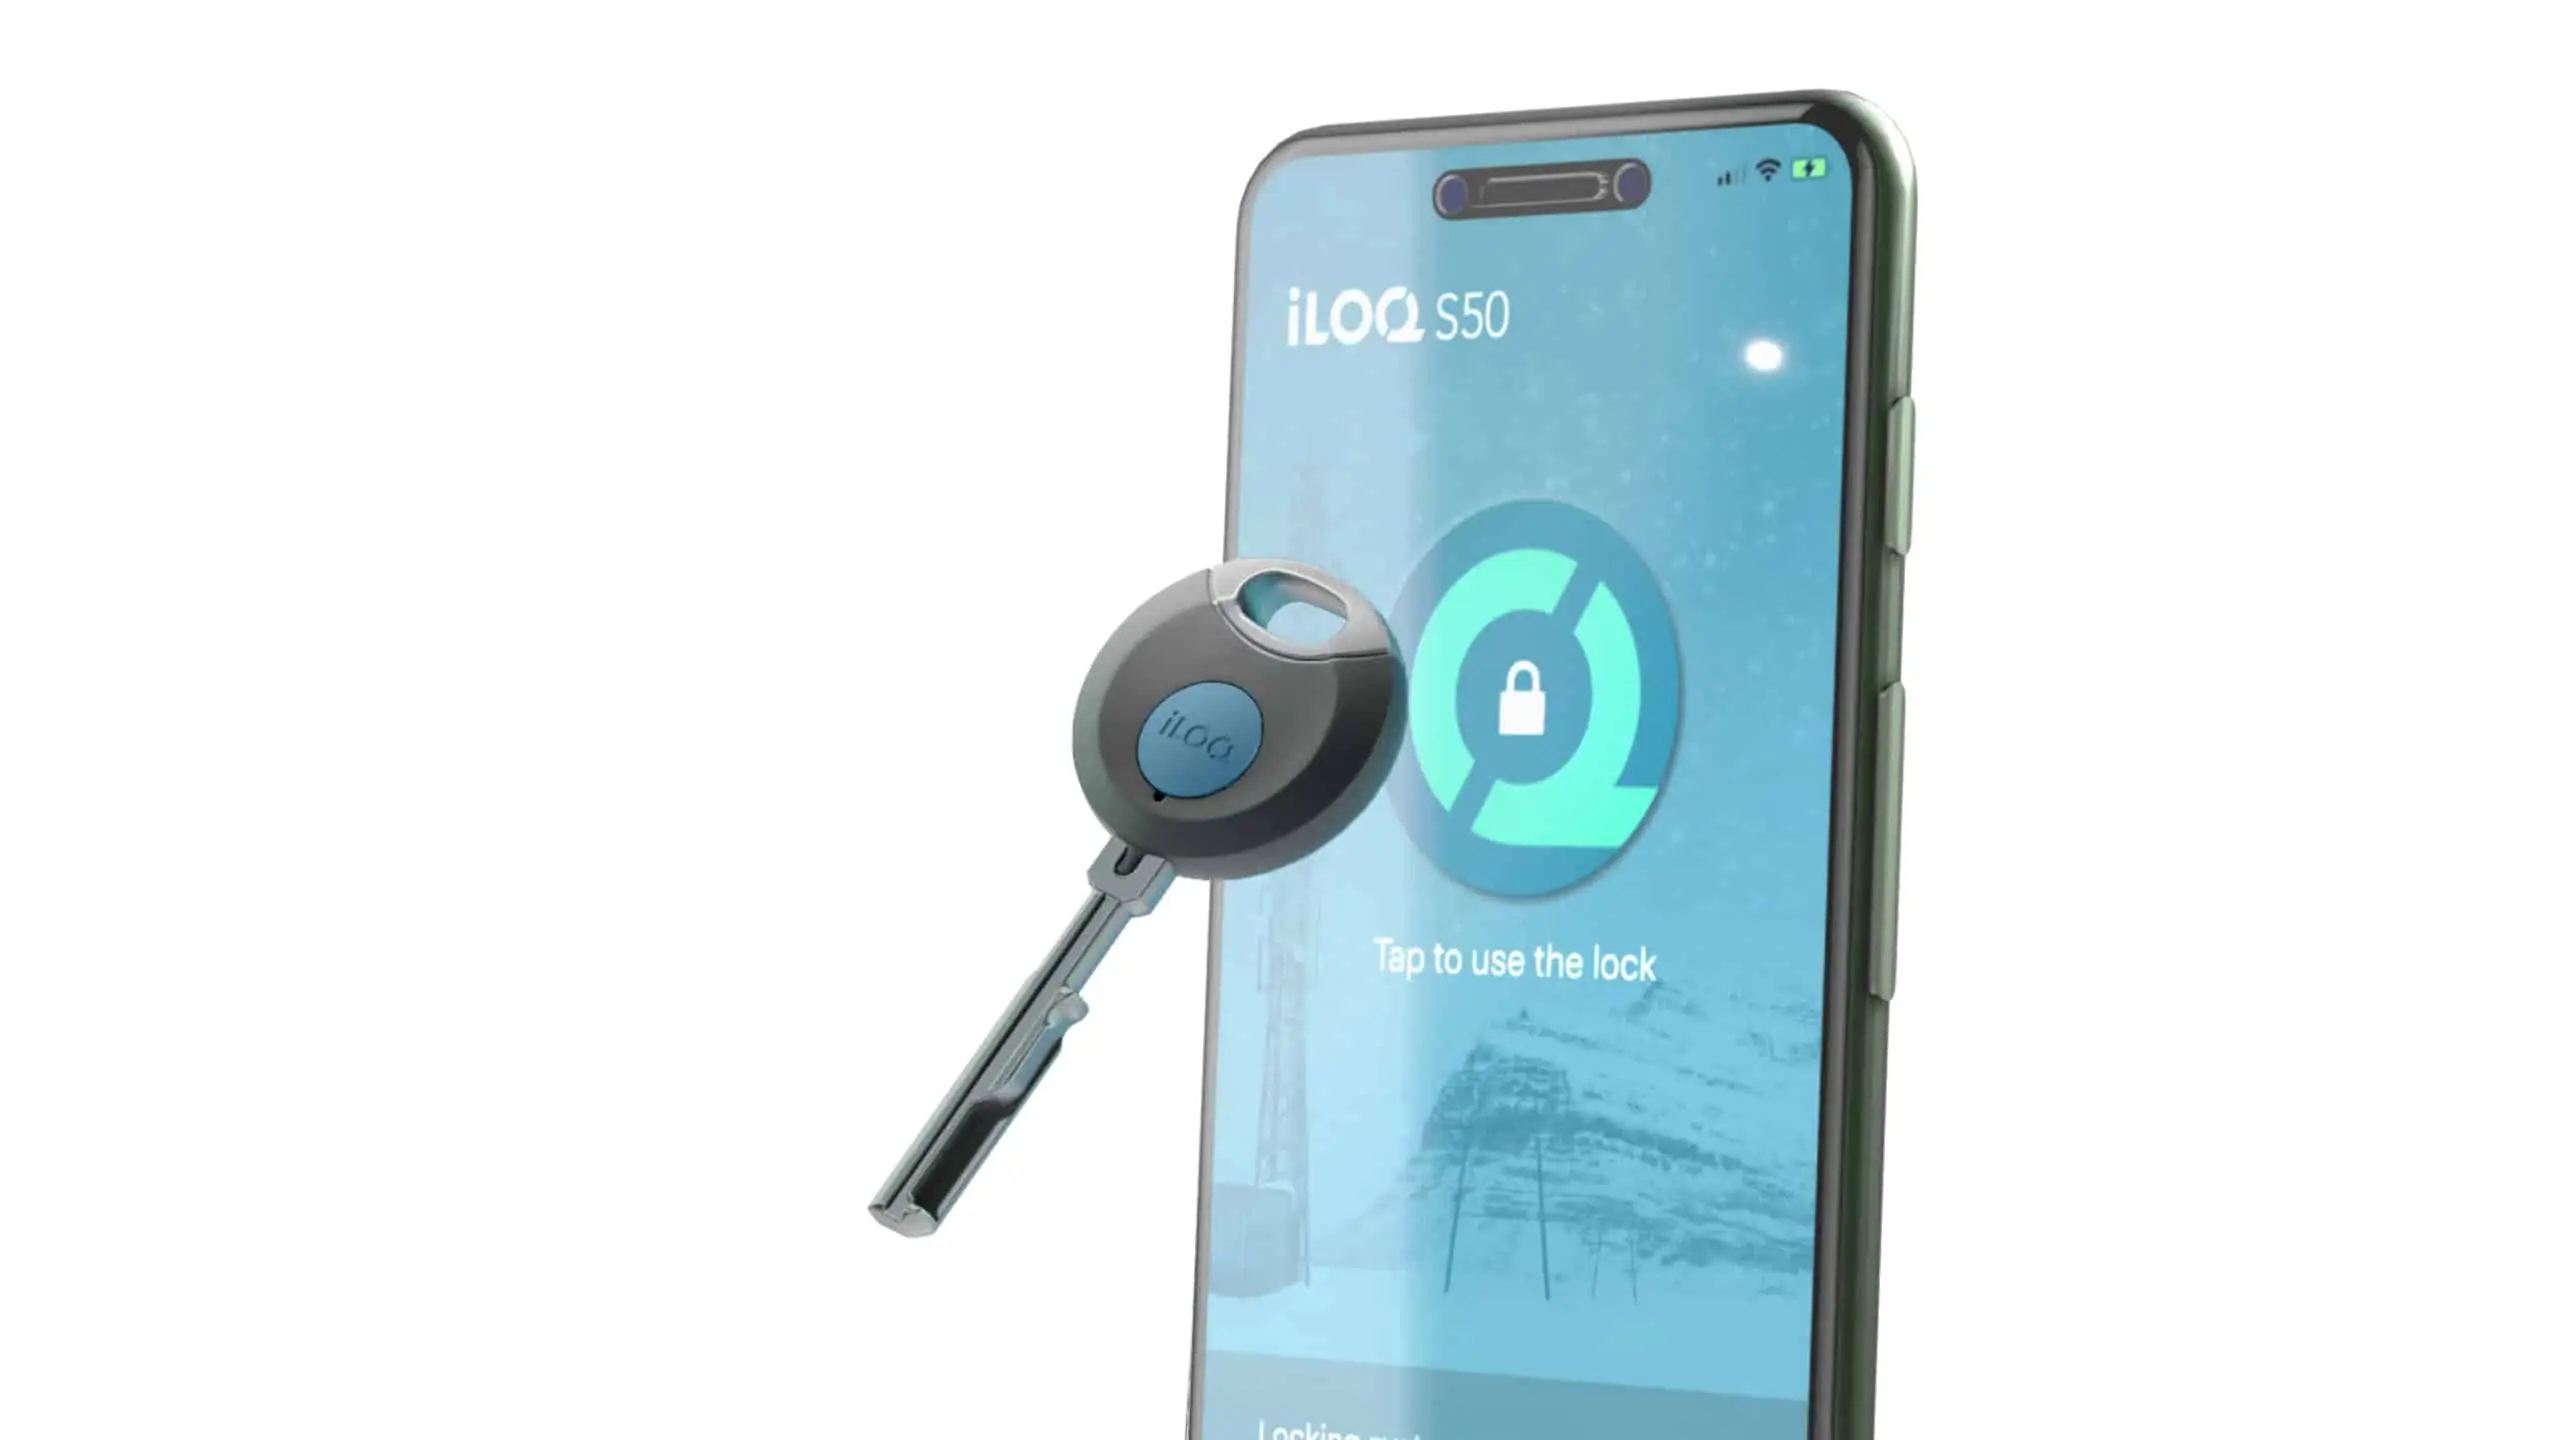 iLOQ_5series_phone and key